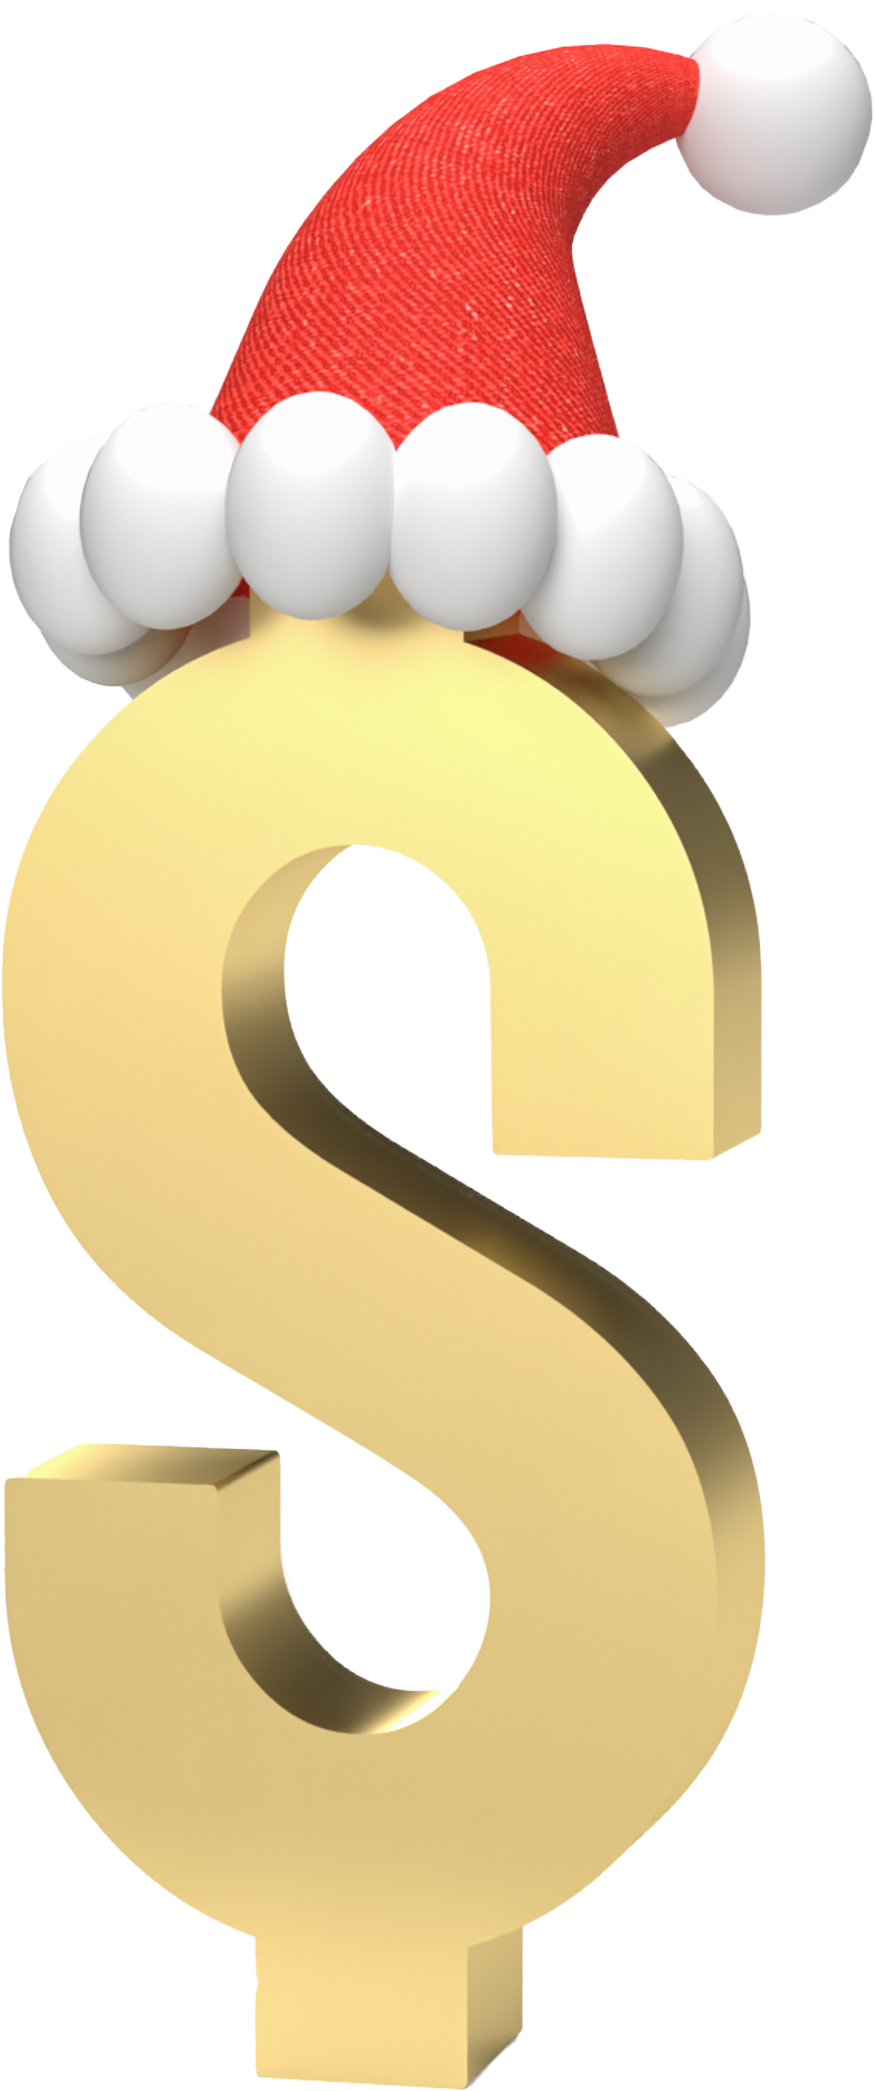 gold-dollar-symbol-santa-hat-white-background-3d-rendering